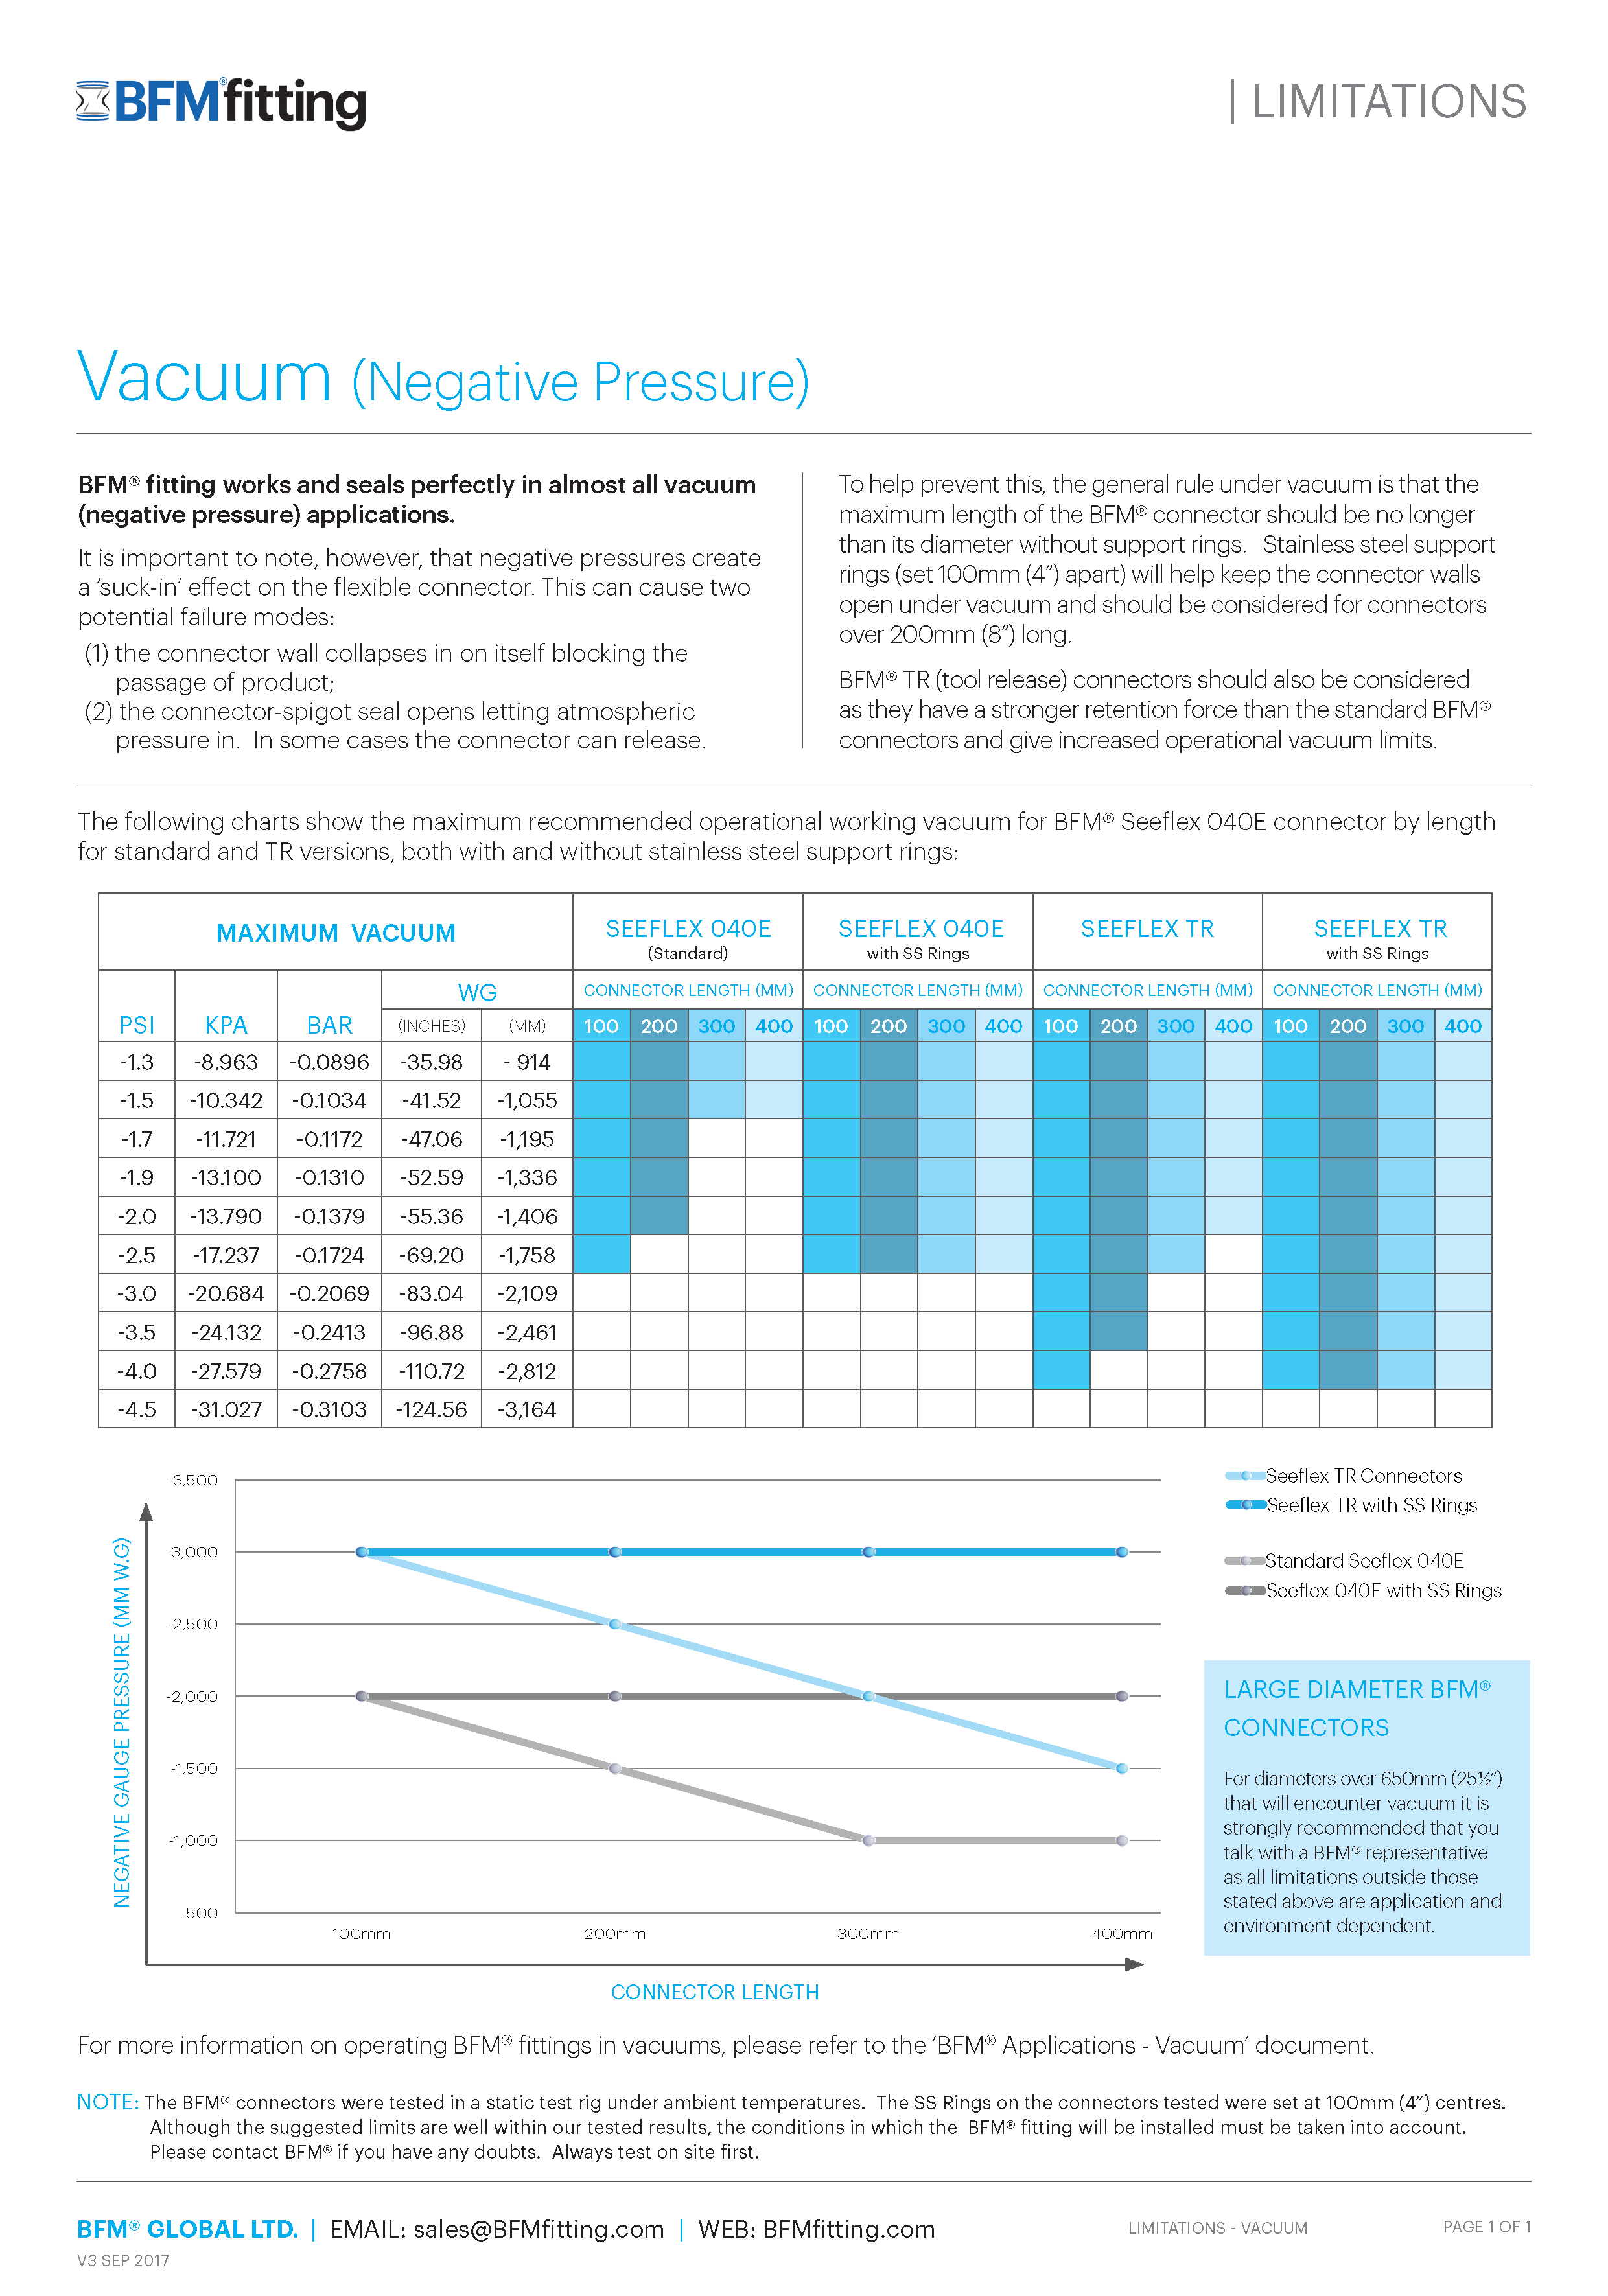 BFM Fitting Vacuum Negative Pressure Limitations